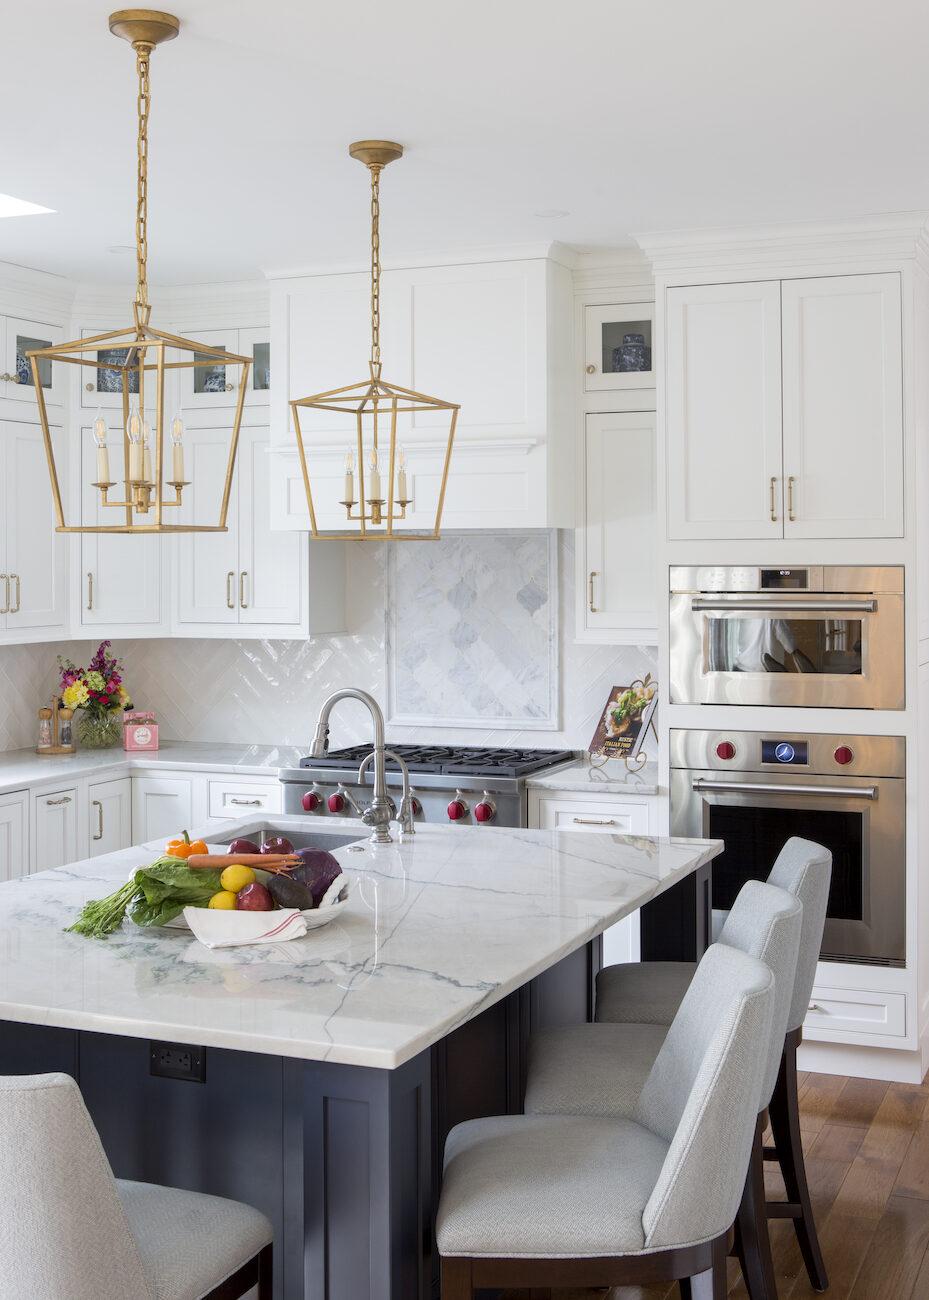 marble-kitchen-island-counter-barstools-interior-design